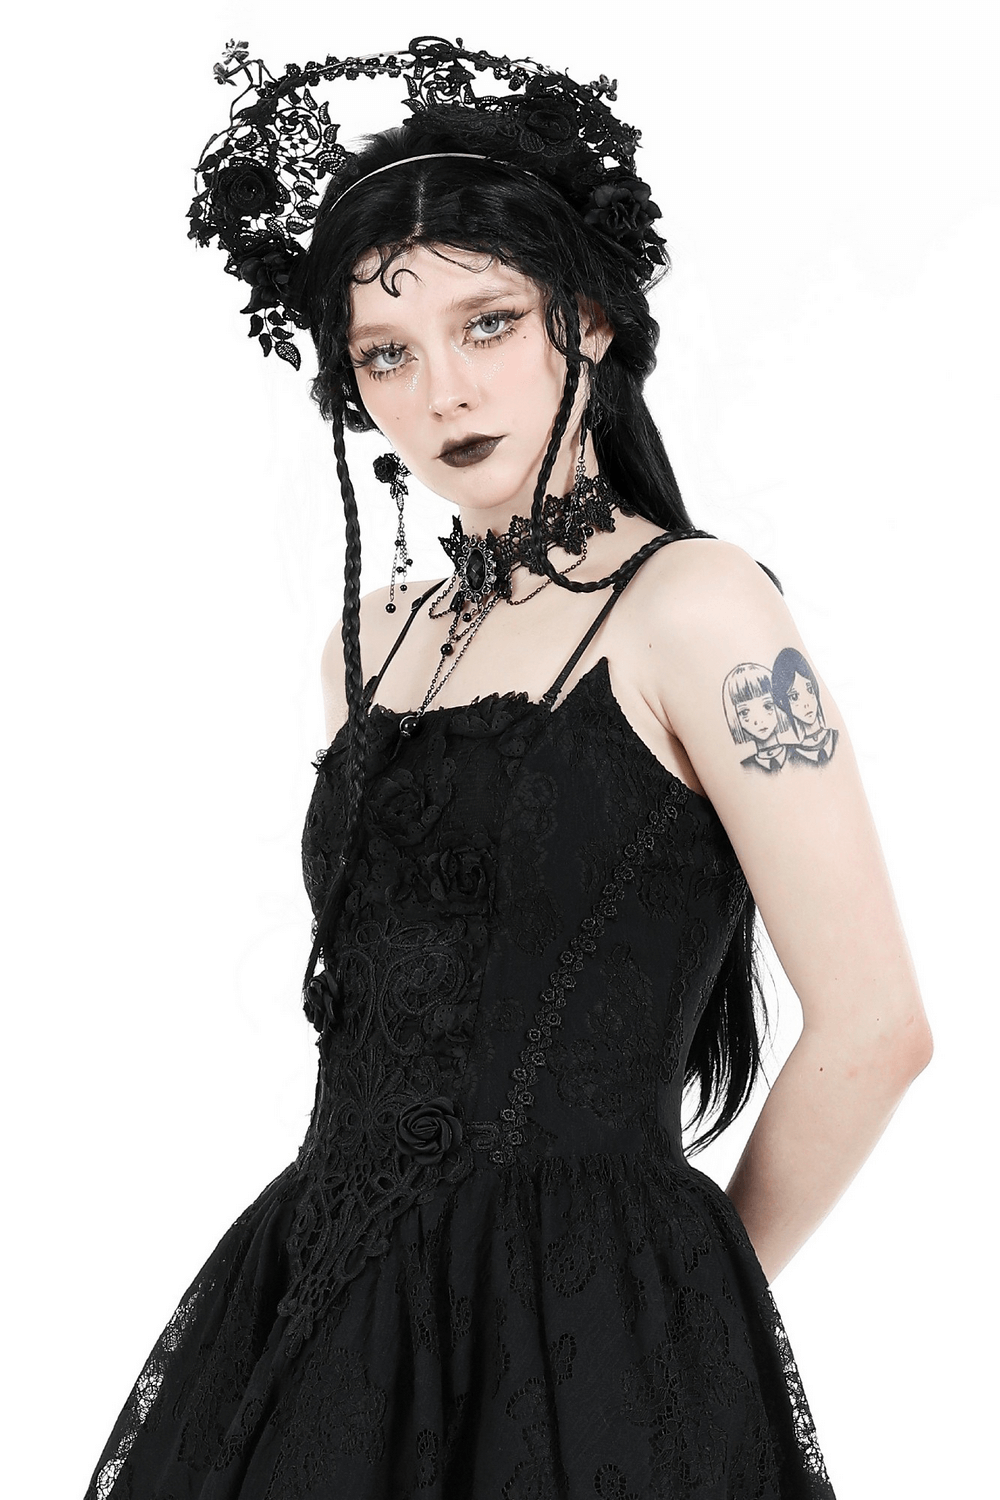 Elegant Female Lace Choker with Silver Cross Pendant